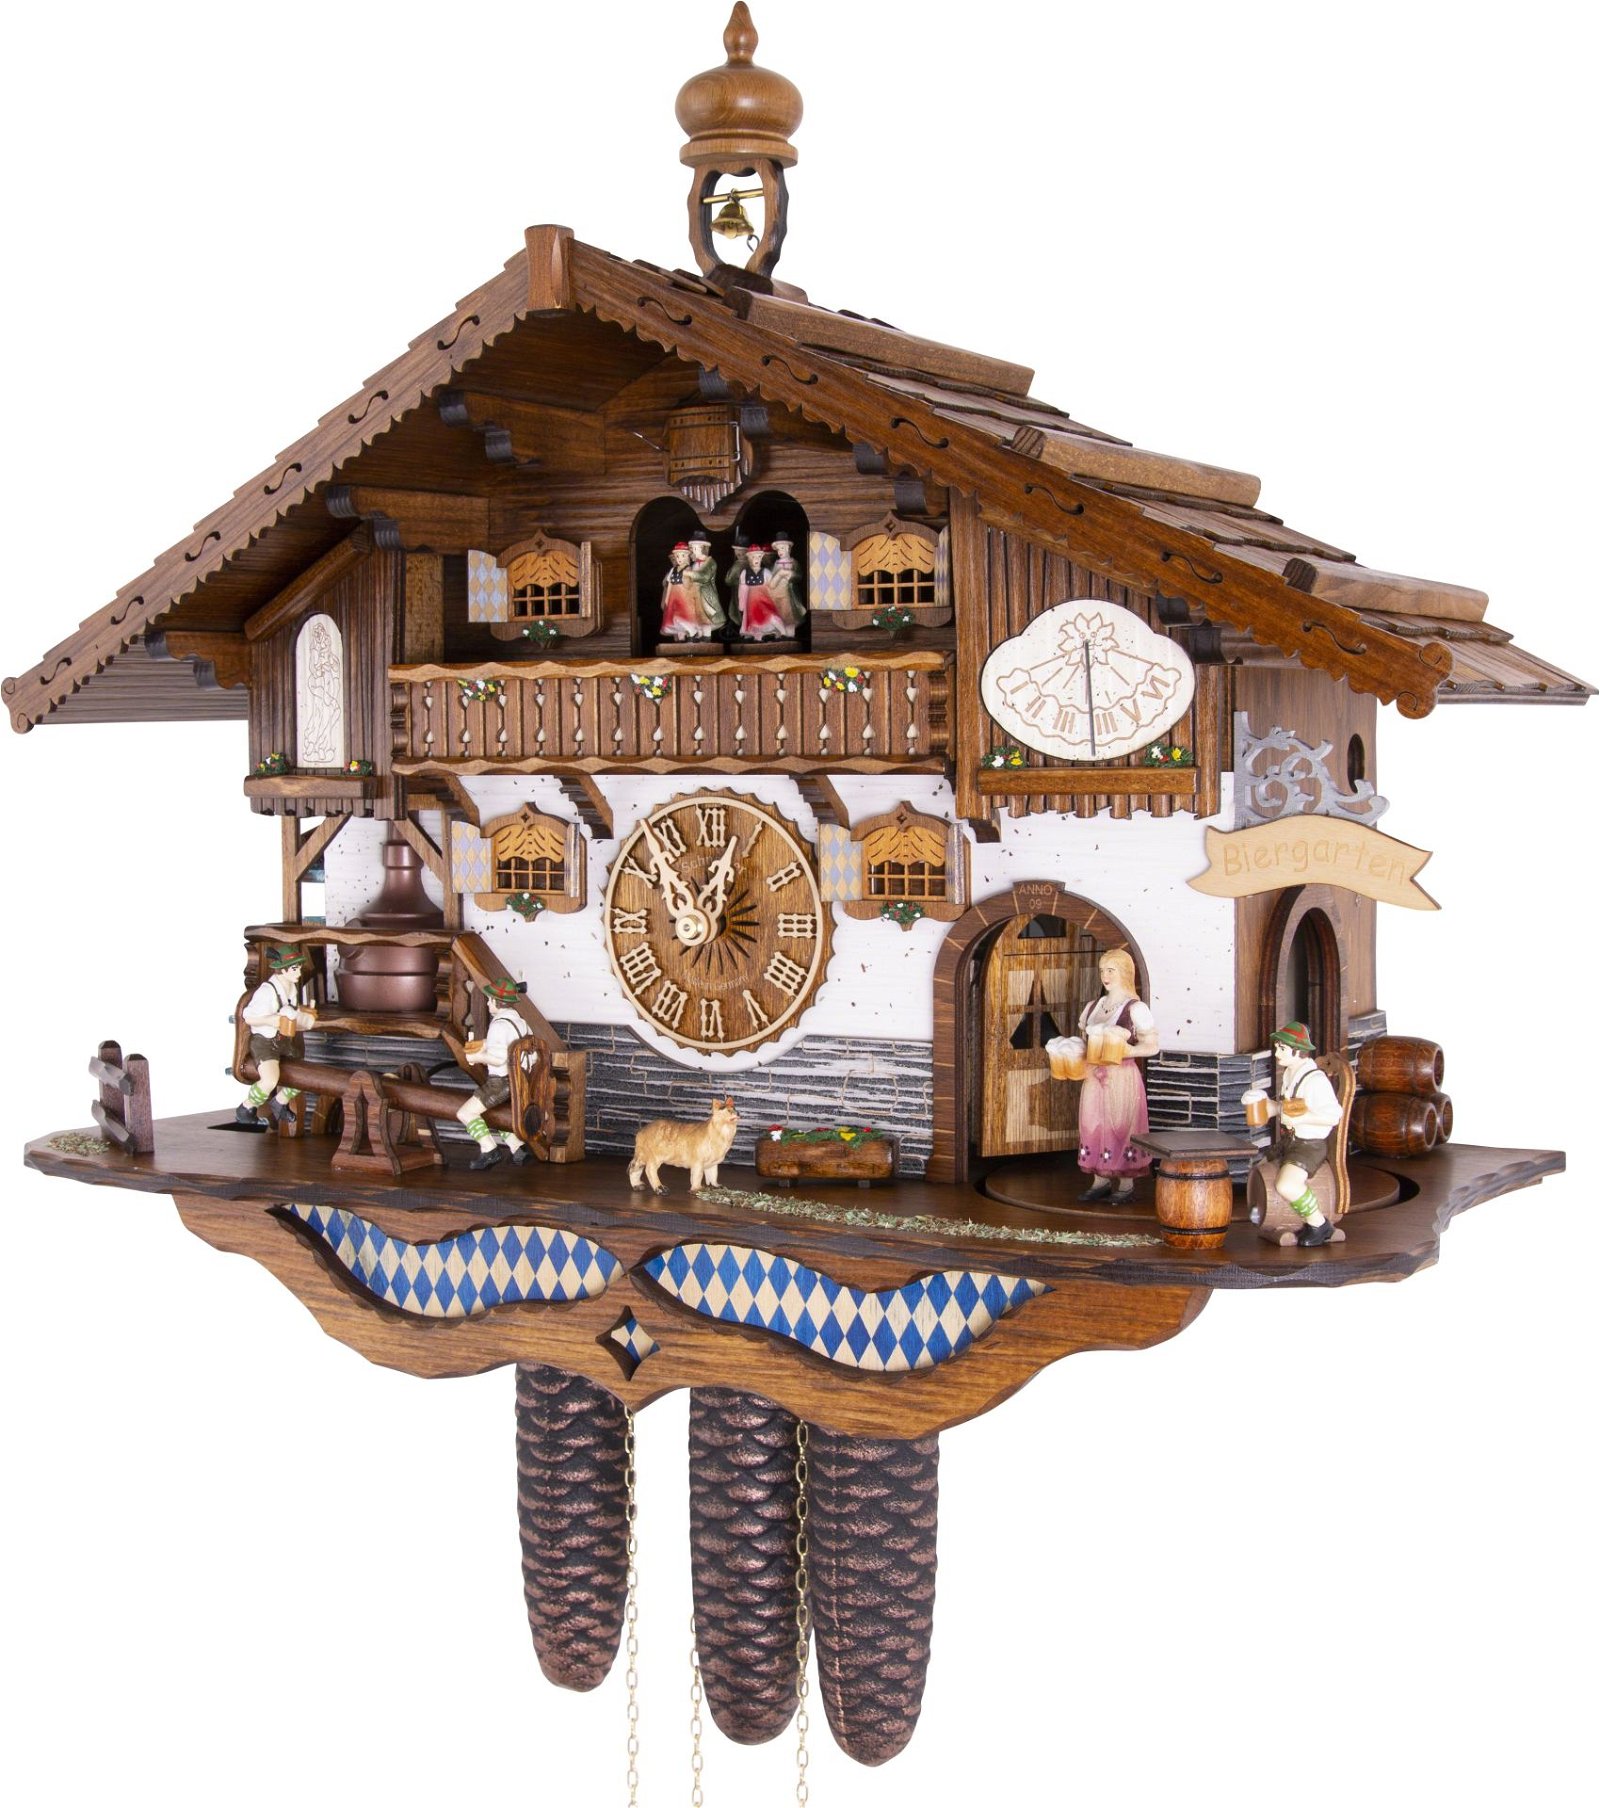 Reloj cuco - Chalet - Kuckucksuhren Shop - Original Kuckucksuhren aus dem  Schwarzwald